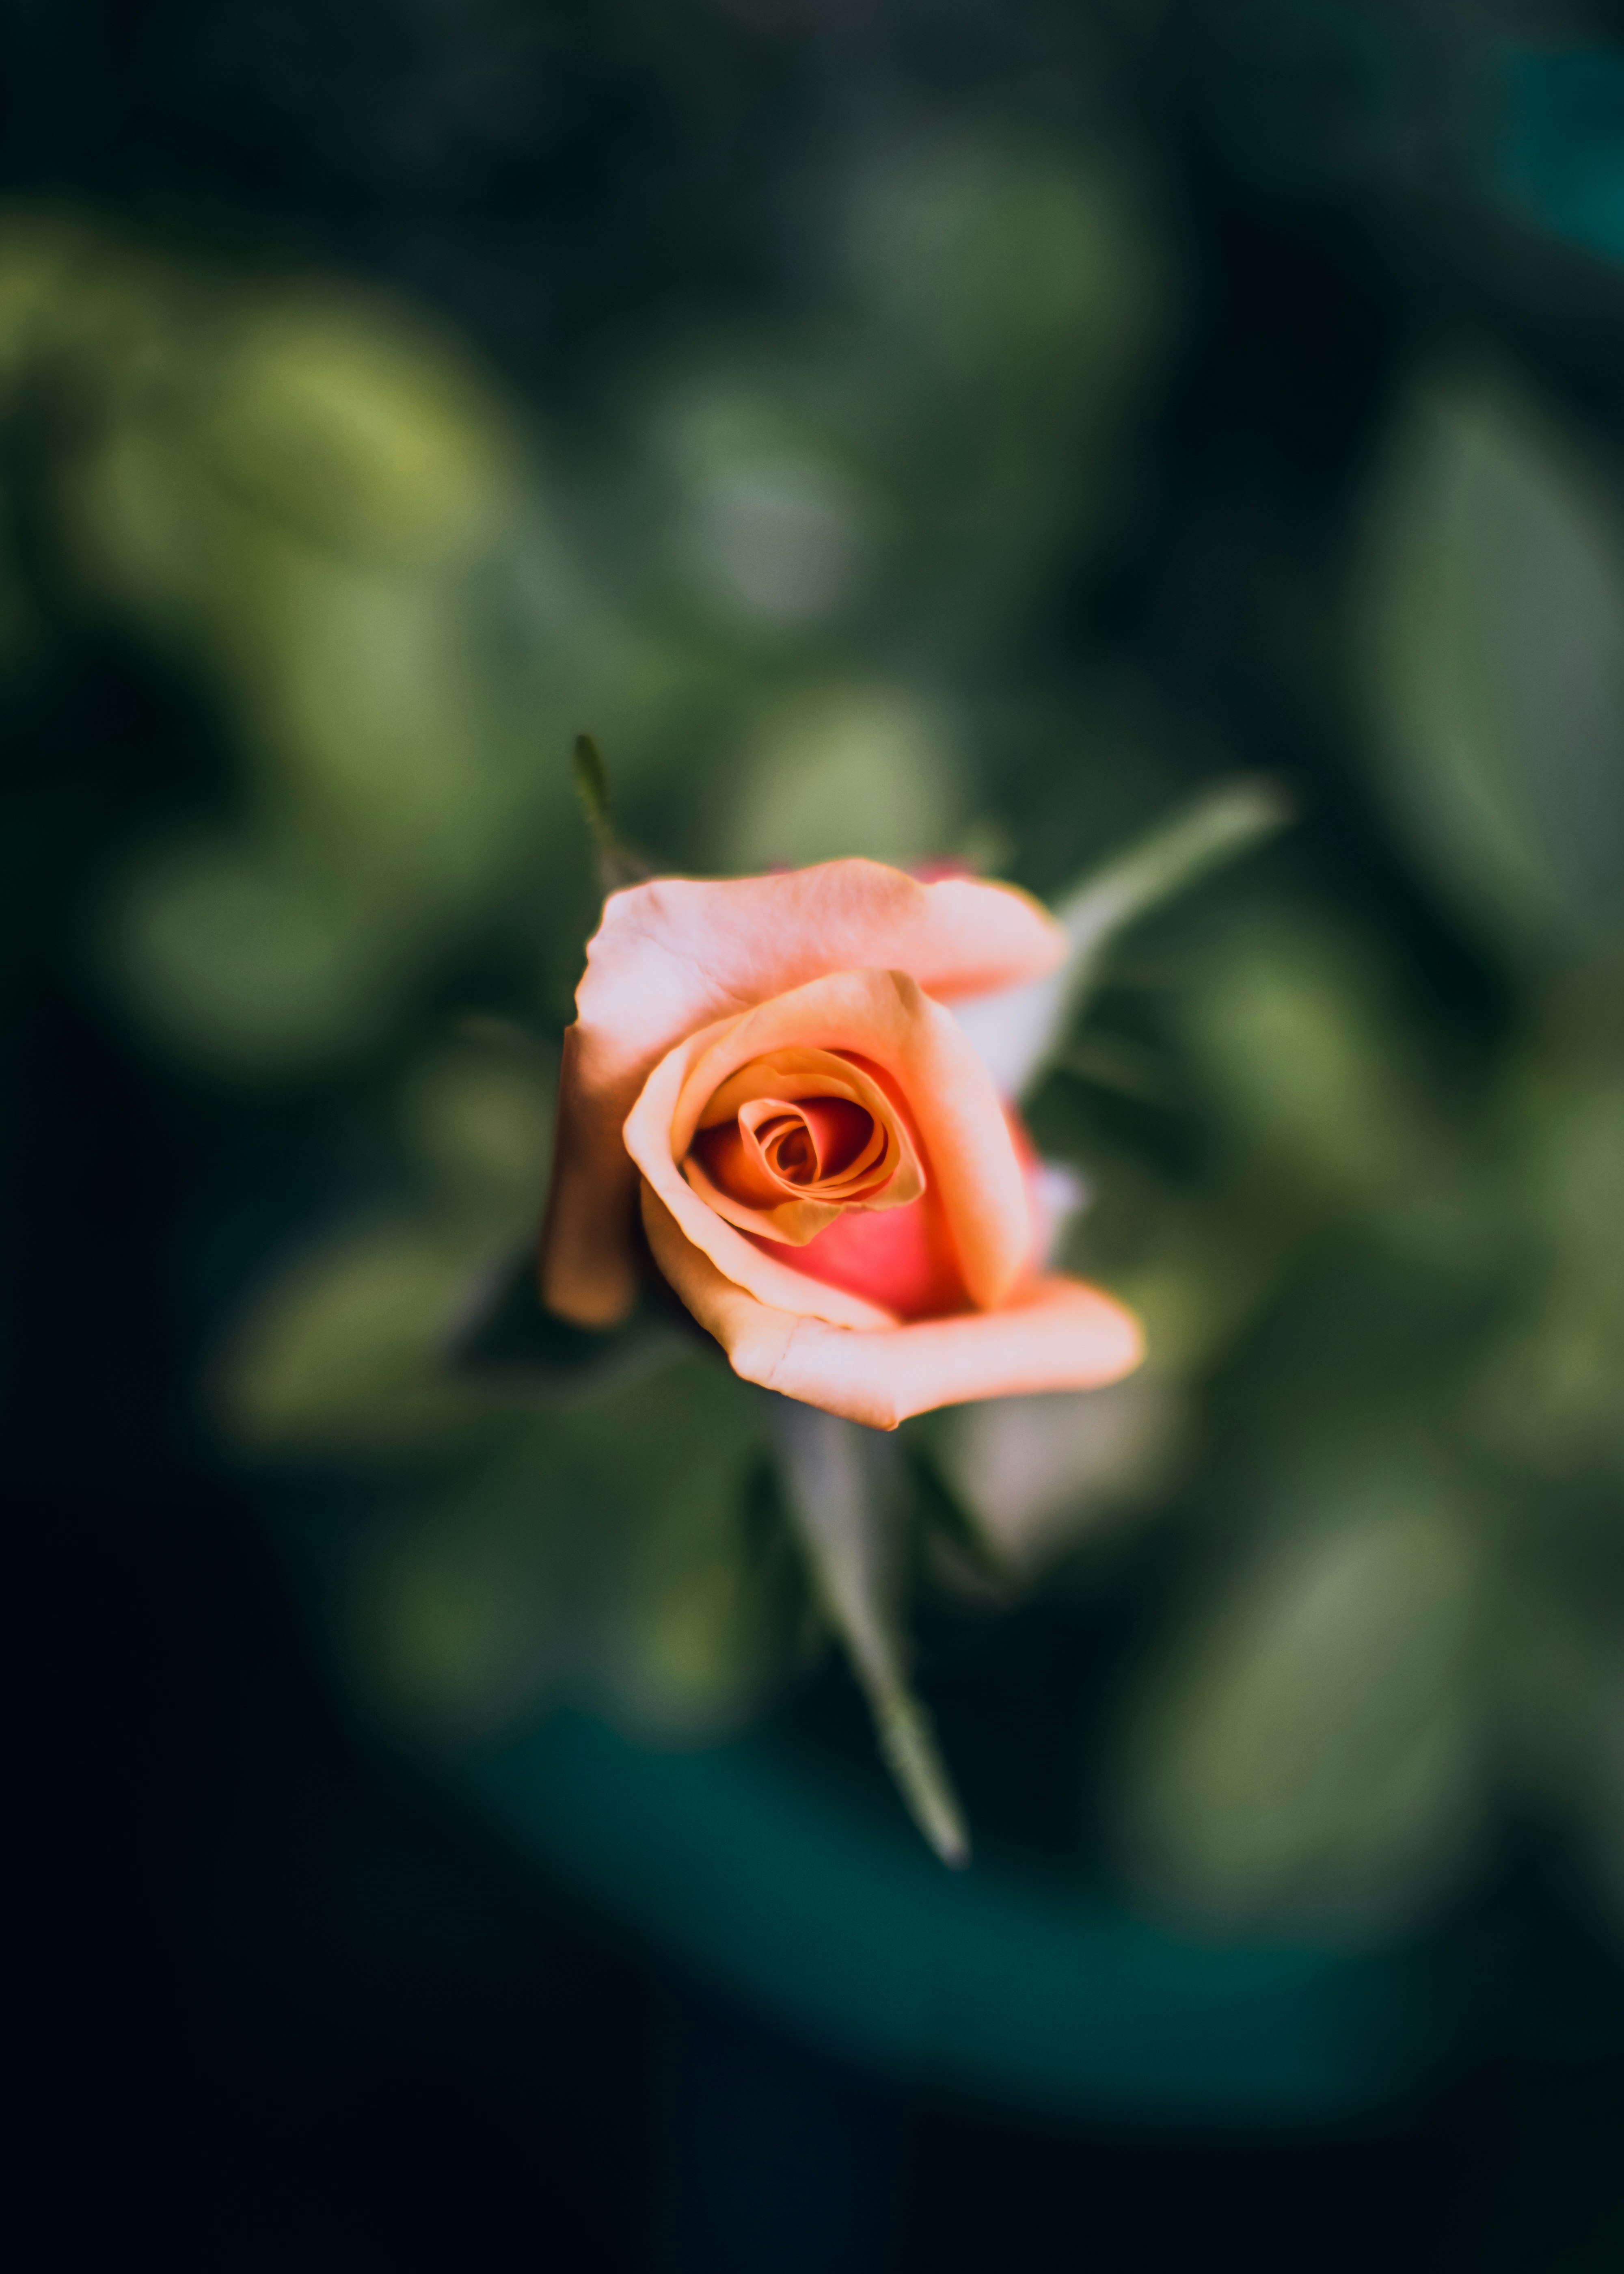 shallow focus photography of orange rose